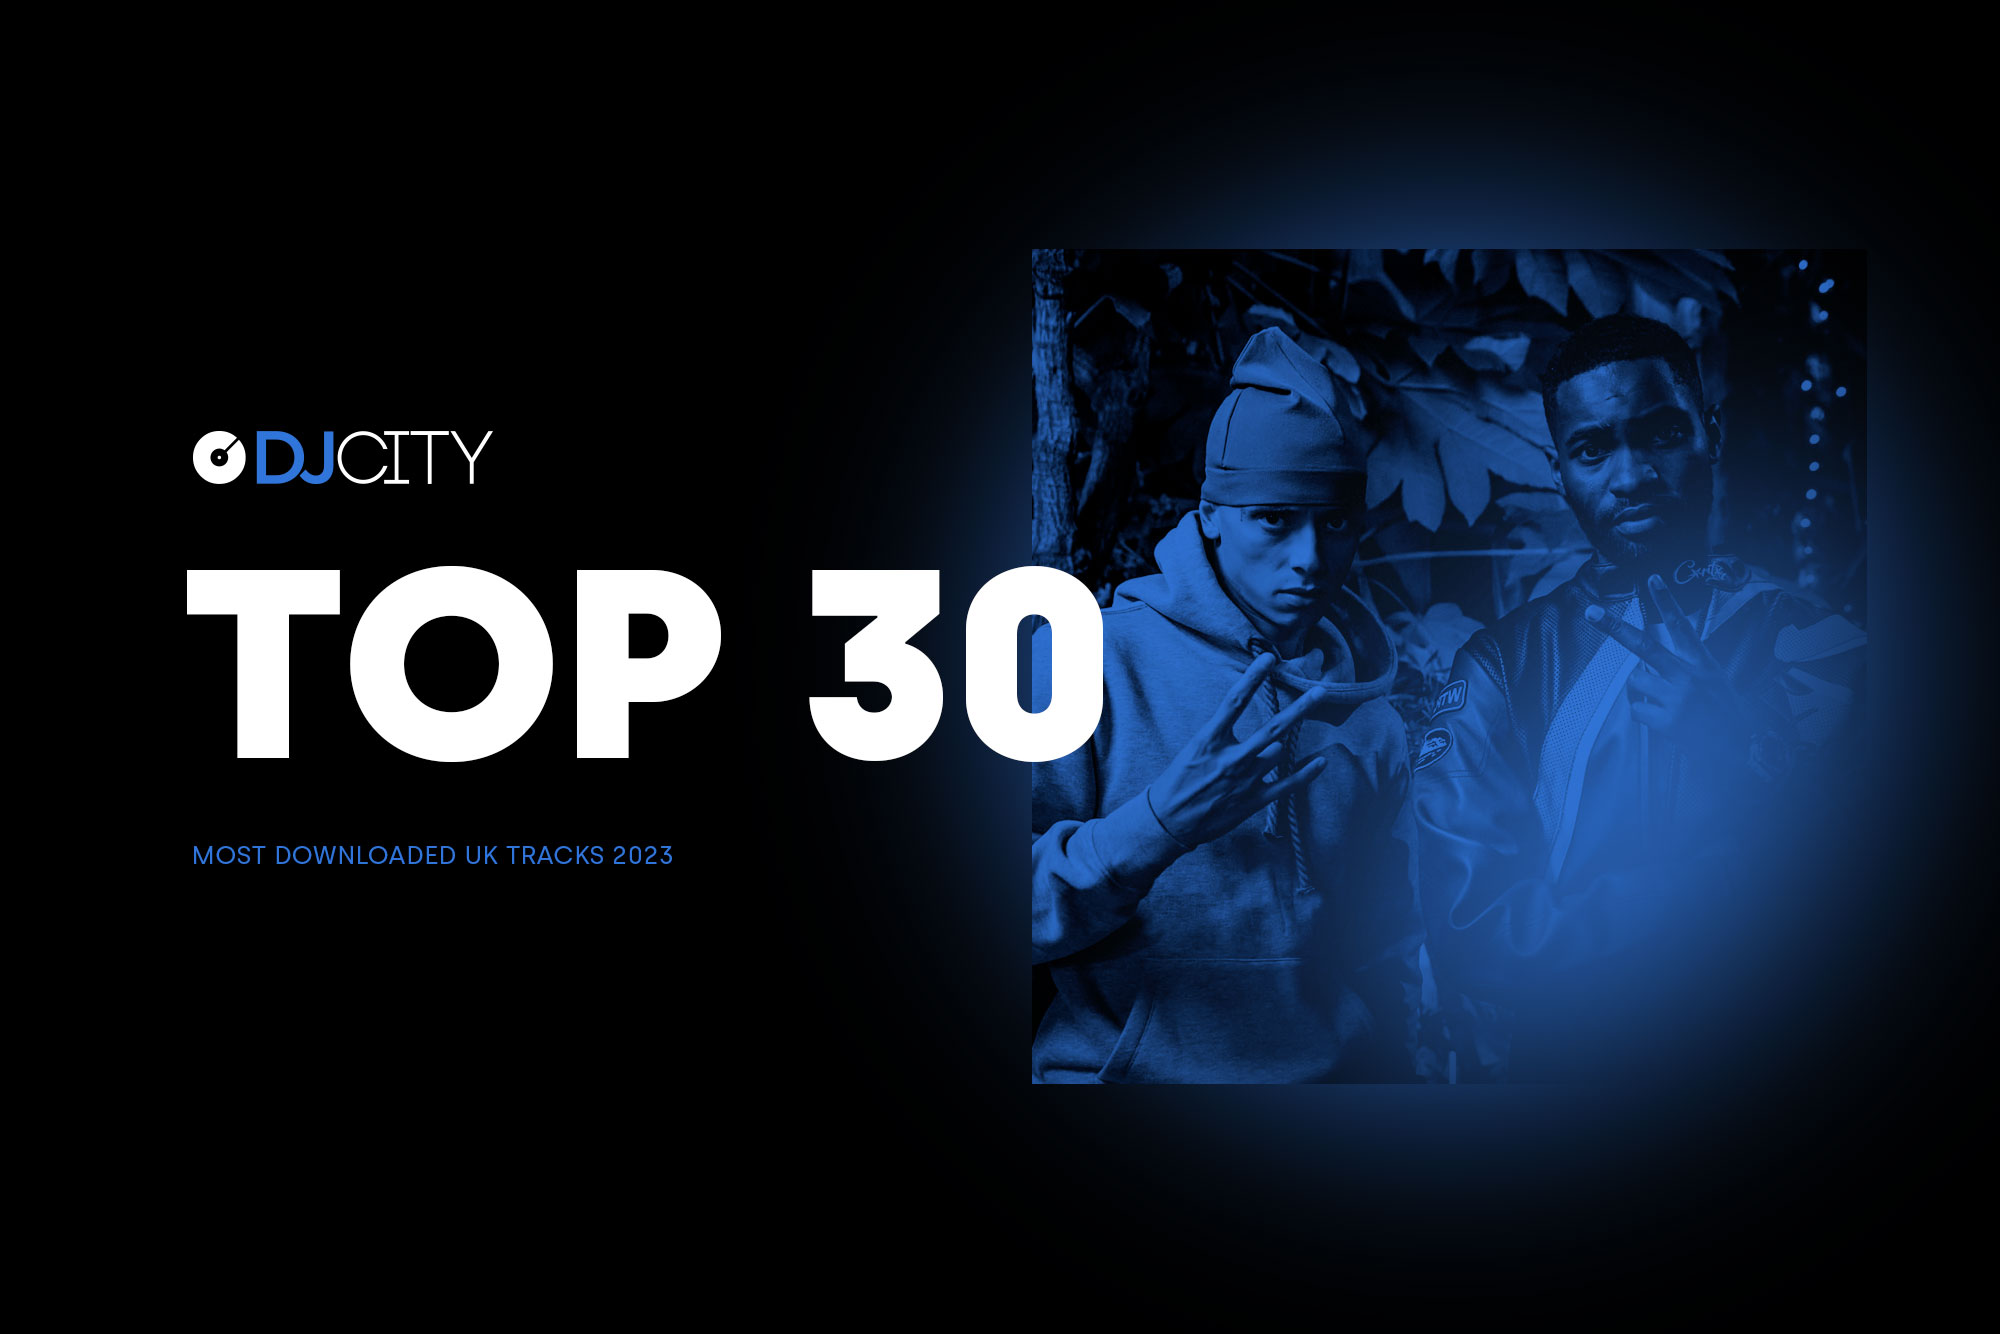 DJcity’s 30 Most Downloaded UK Tracks of 2023